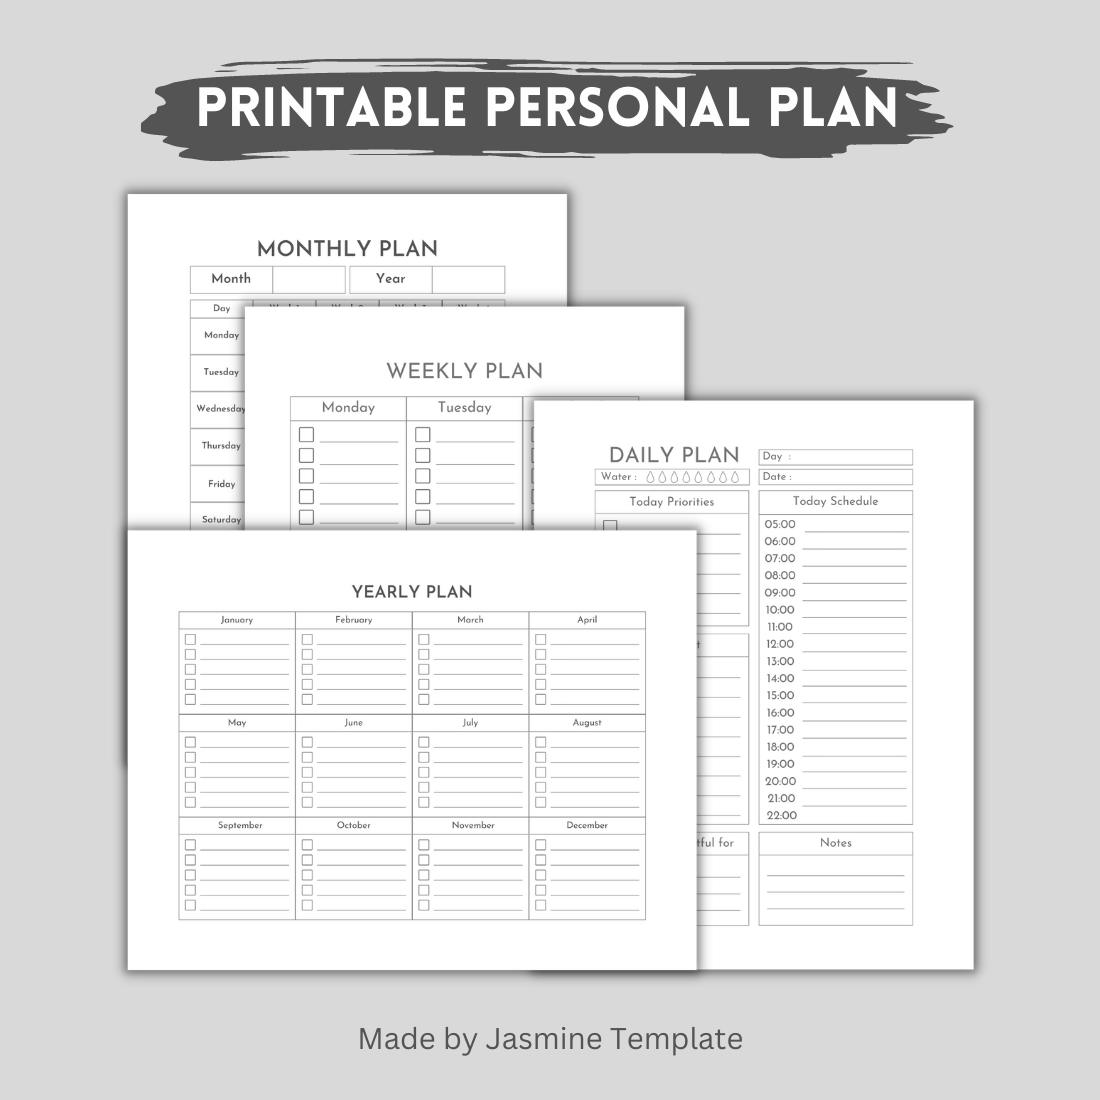 Printable Personal Plan.